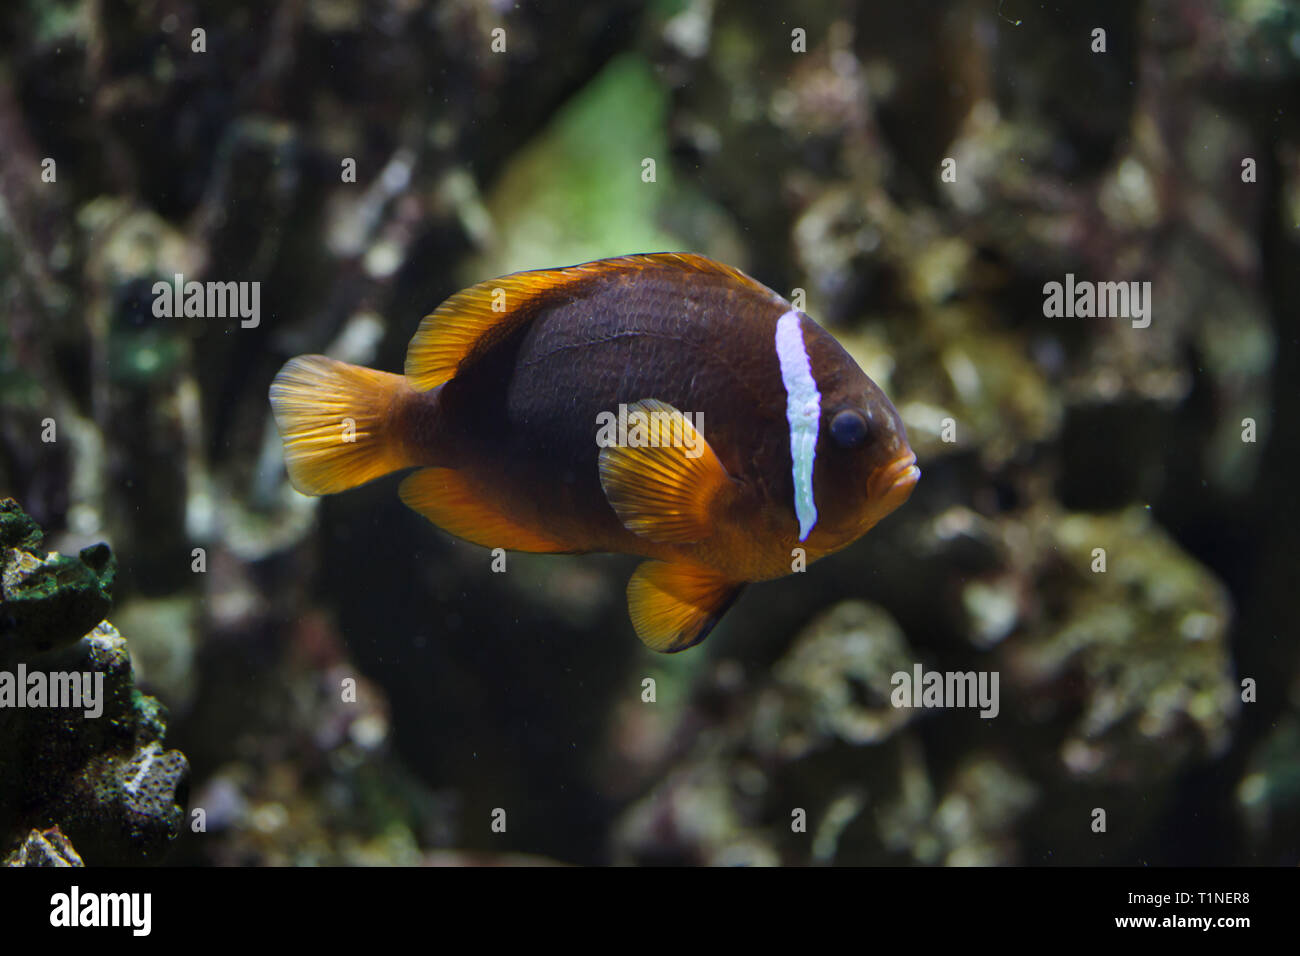 Tomato clownfish (Amphiprion frenatus), also known as the blackback anemonefish. Stock Photo